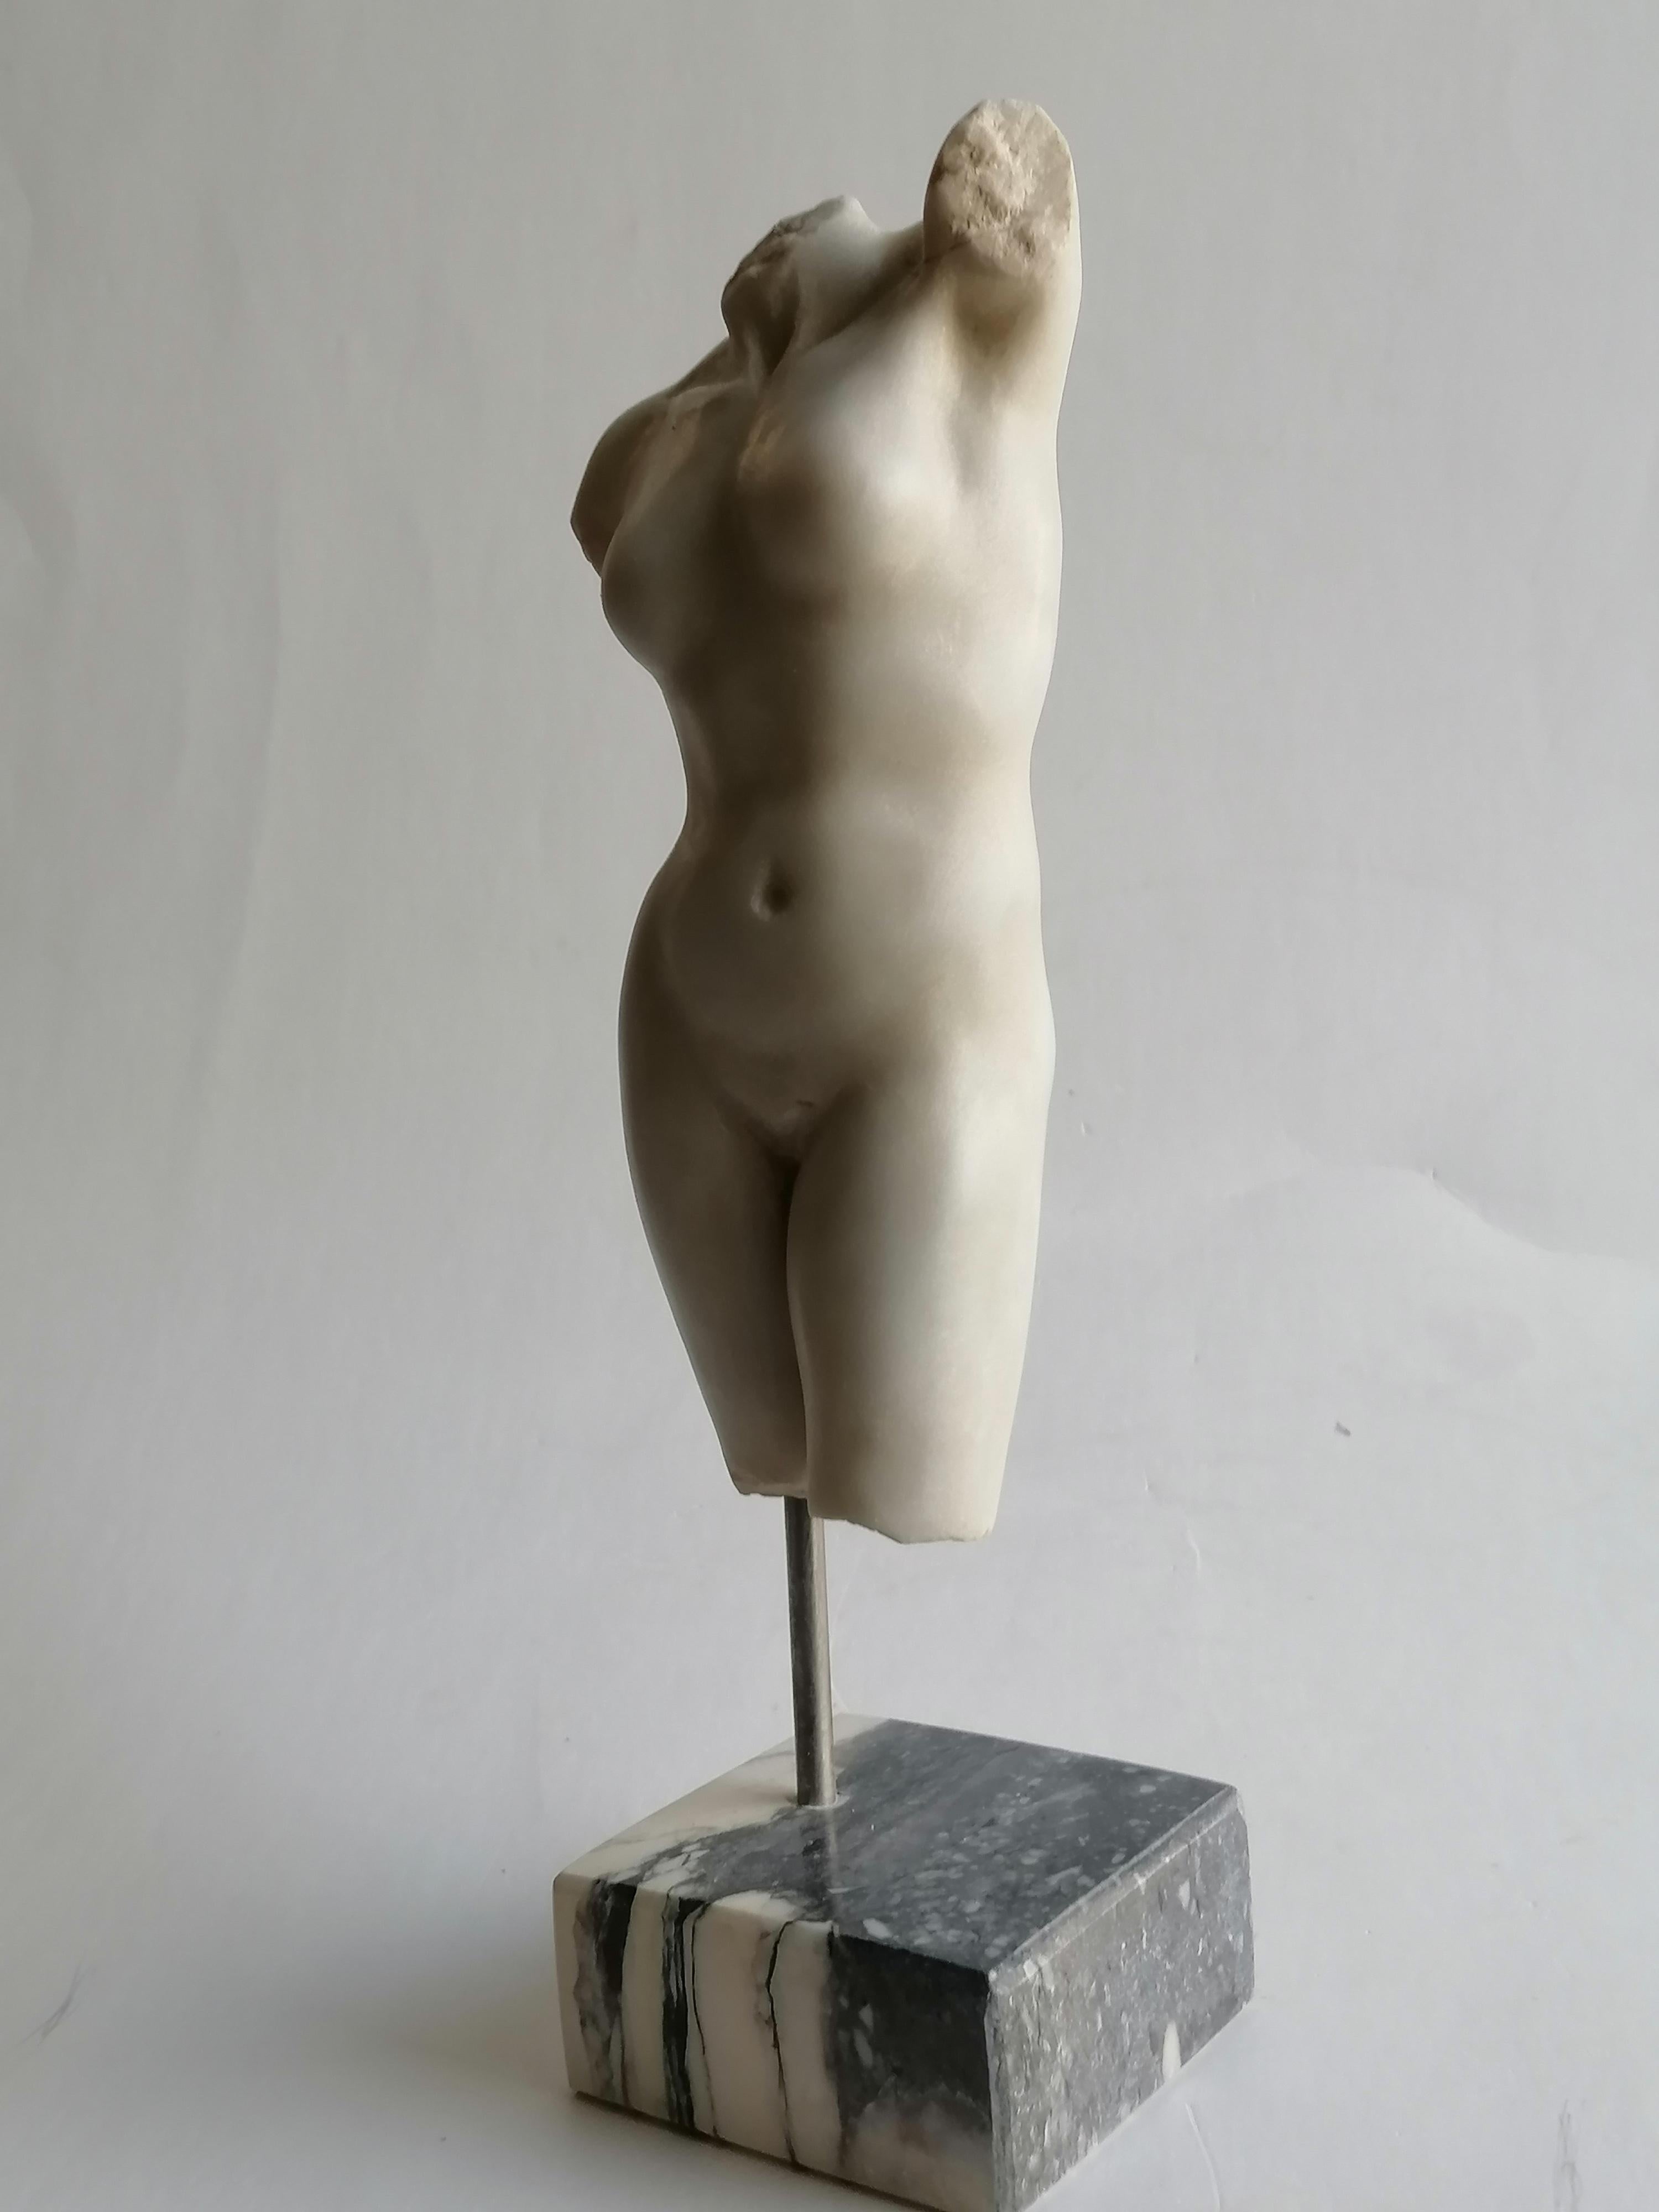 Carrara Marble Torso femminile scolpito su marmo bianco Carrara - miniatura -made in Italy For Sale